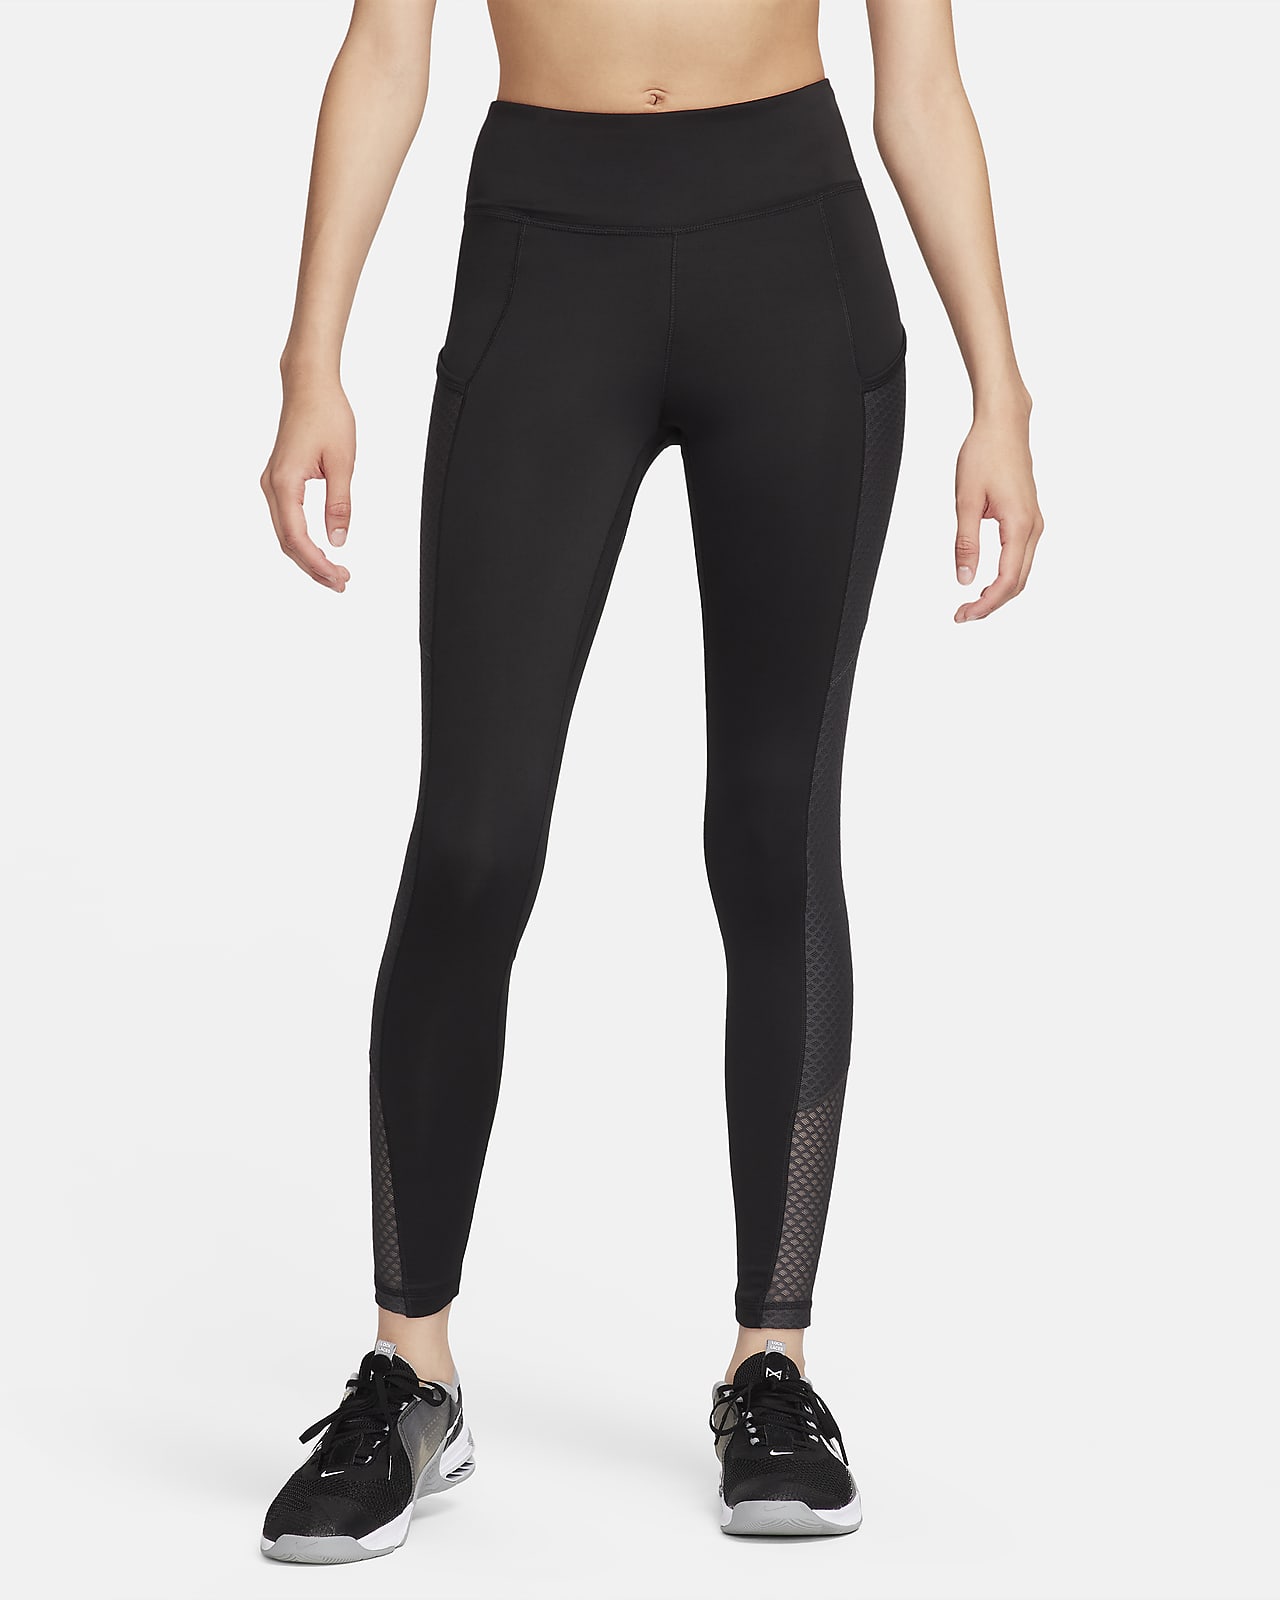 Nike Zenvy Gentle Support High-Waisted Legging - Women's - Als.com